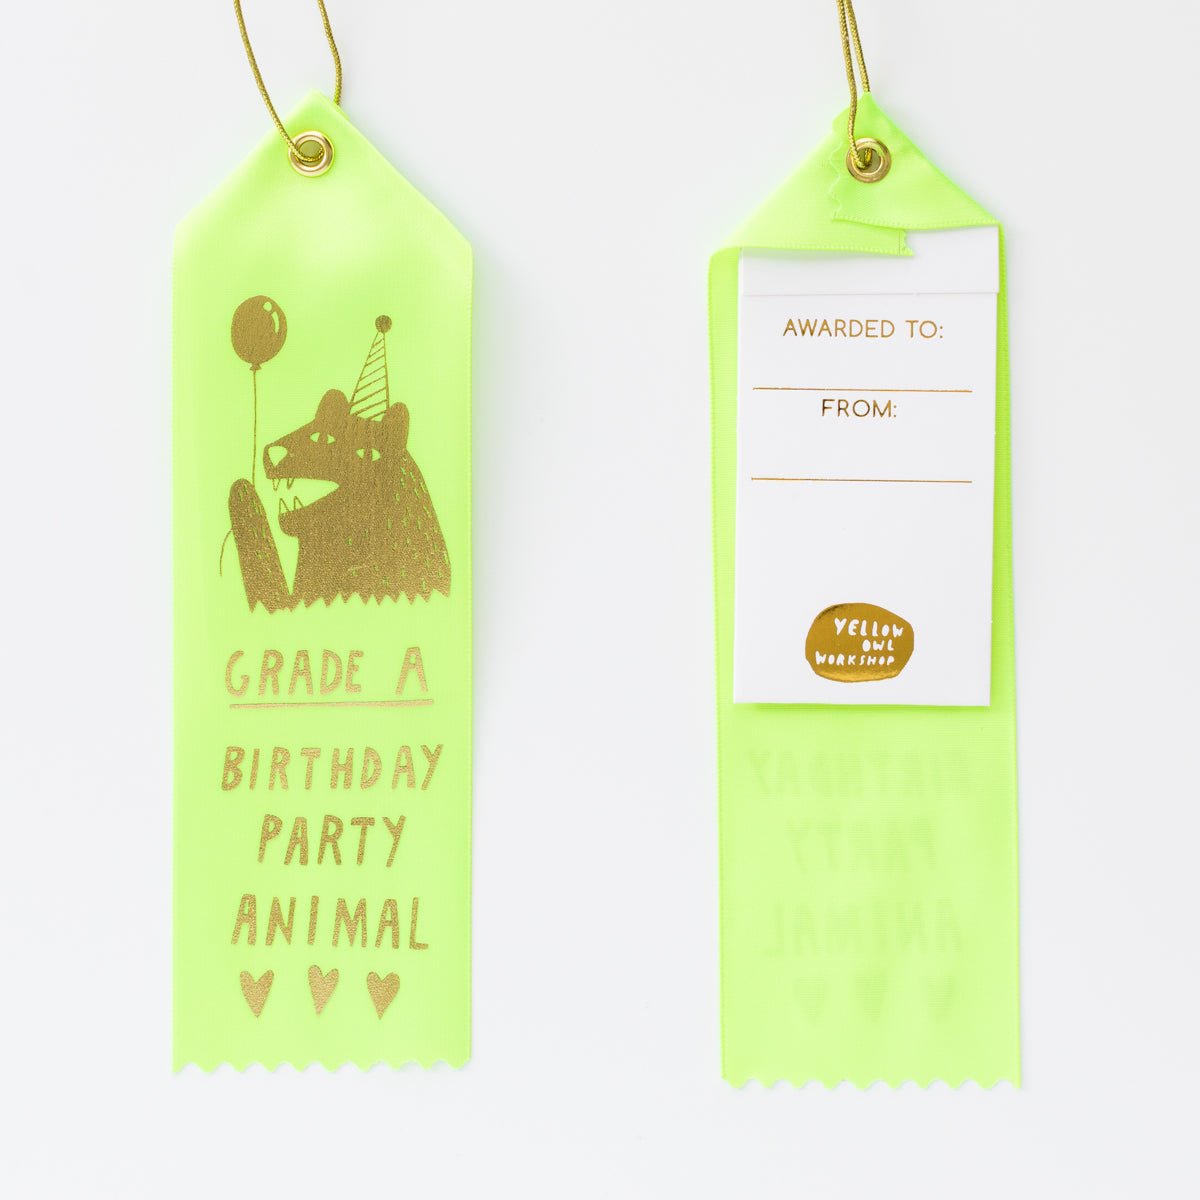 Grade A Birthday Party Animal - Award Ribbon Card - Yellow Owl Workshop